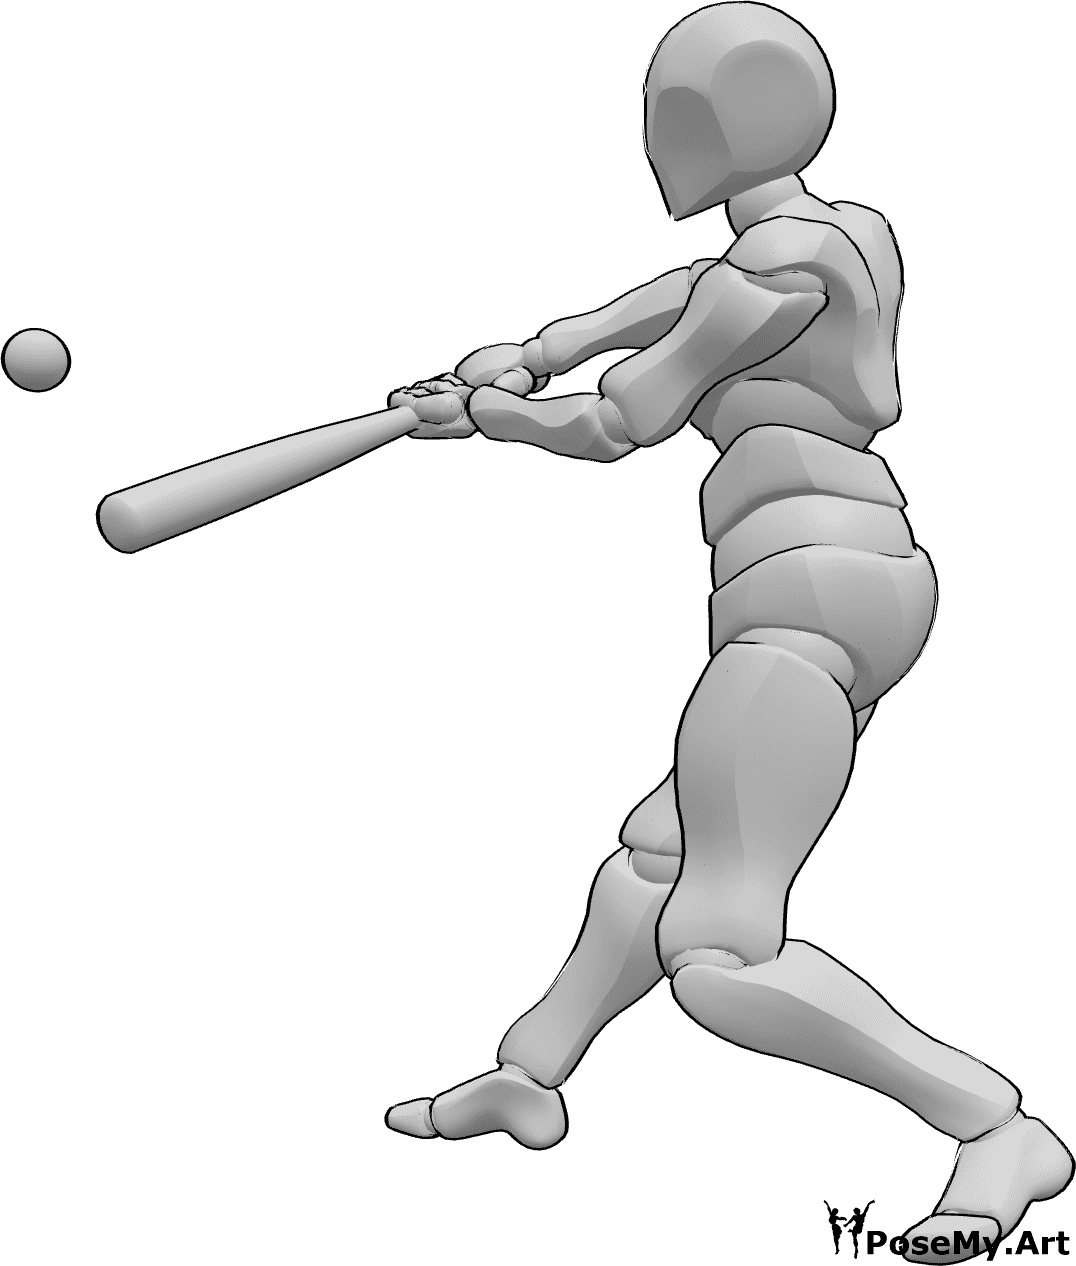 Pose Reference- Hitting baseball pose - Male baseball player is standing and hitting the ball